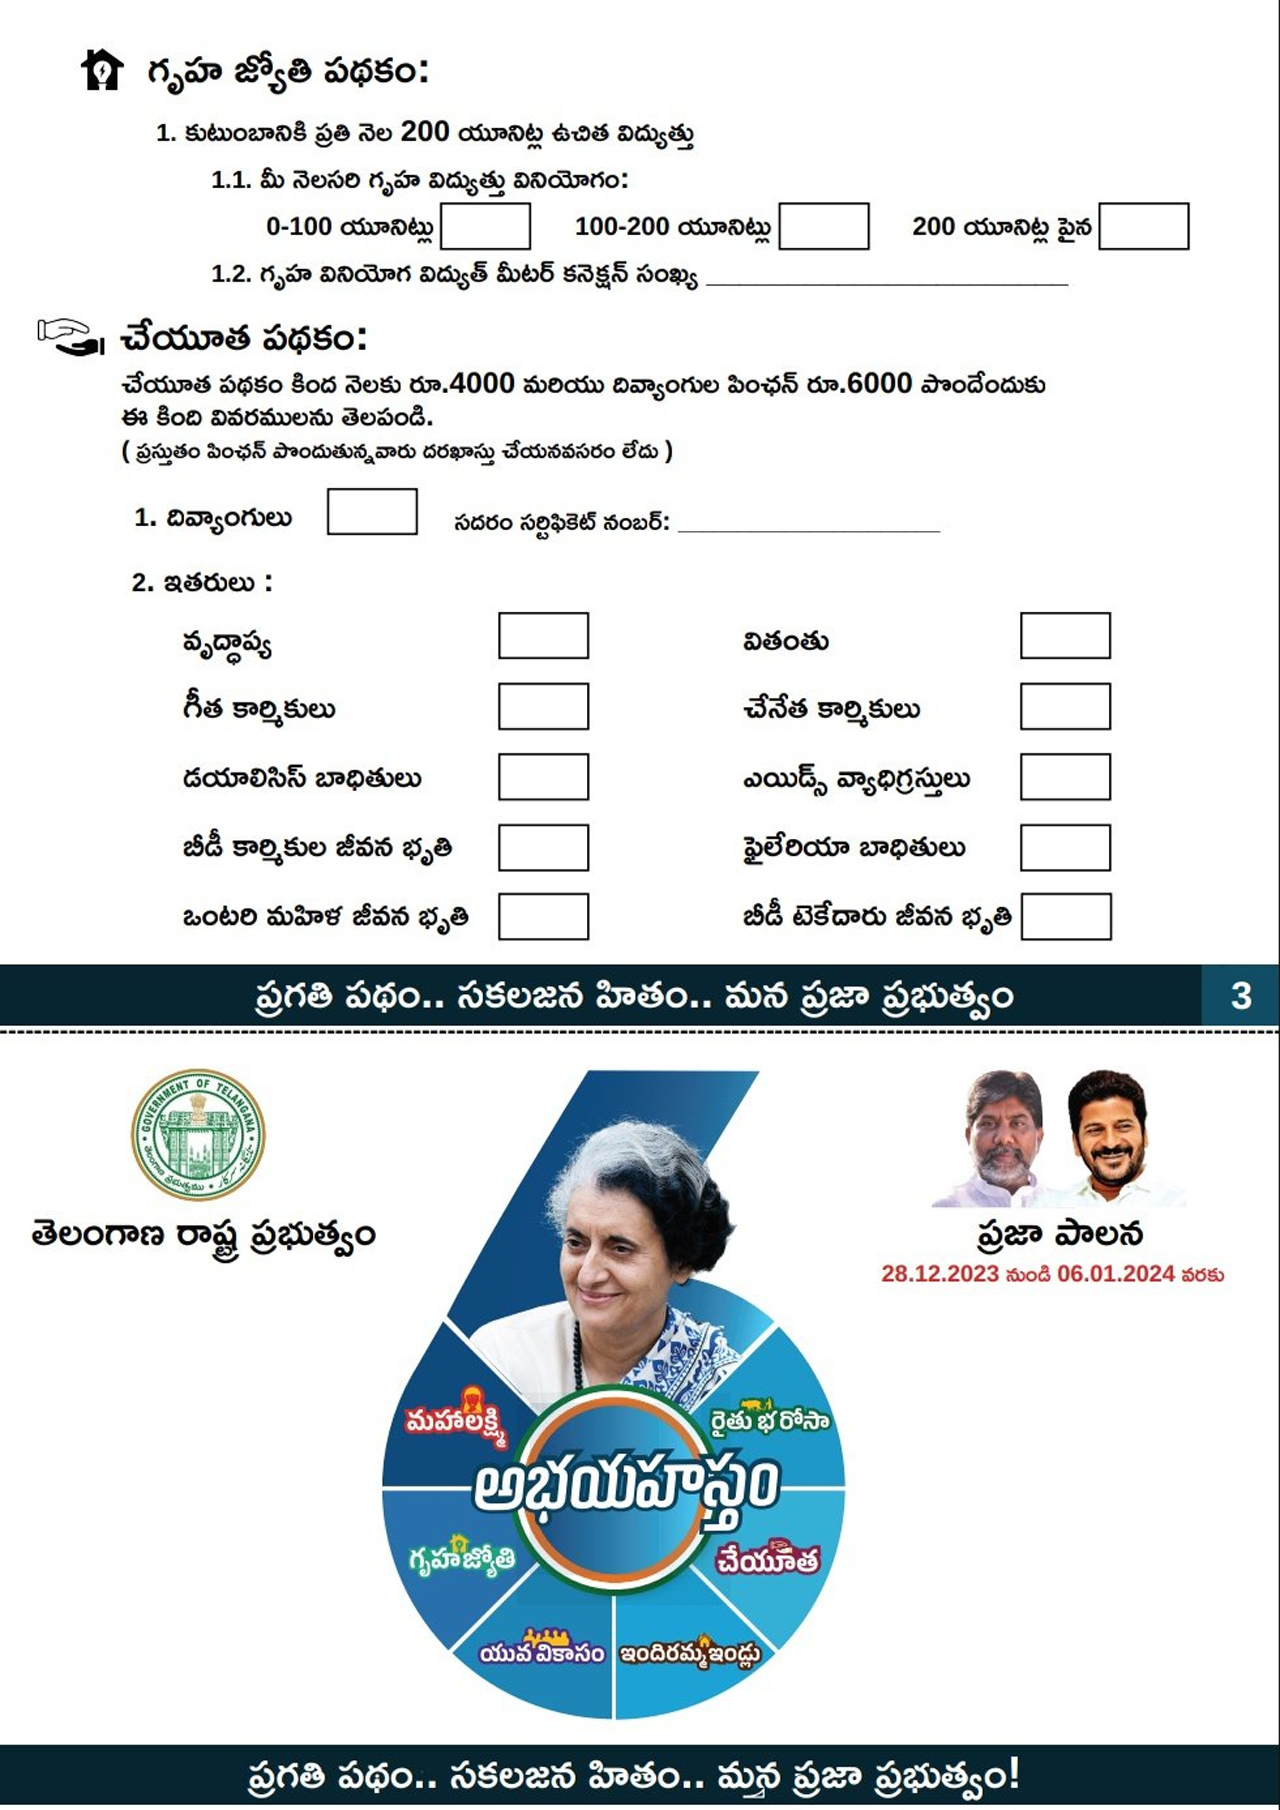 Congress Praja Palana Application page 3